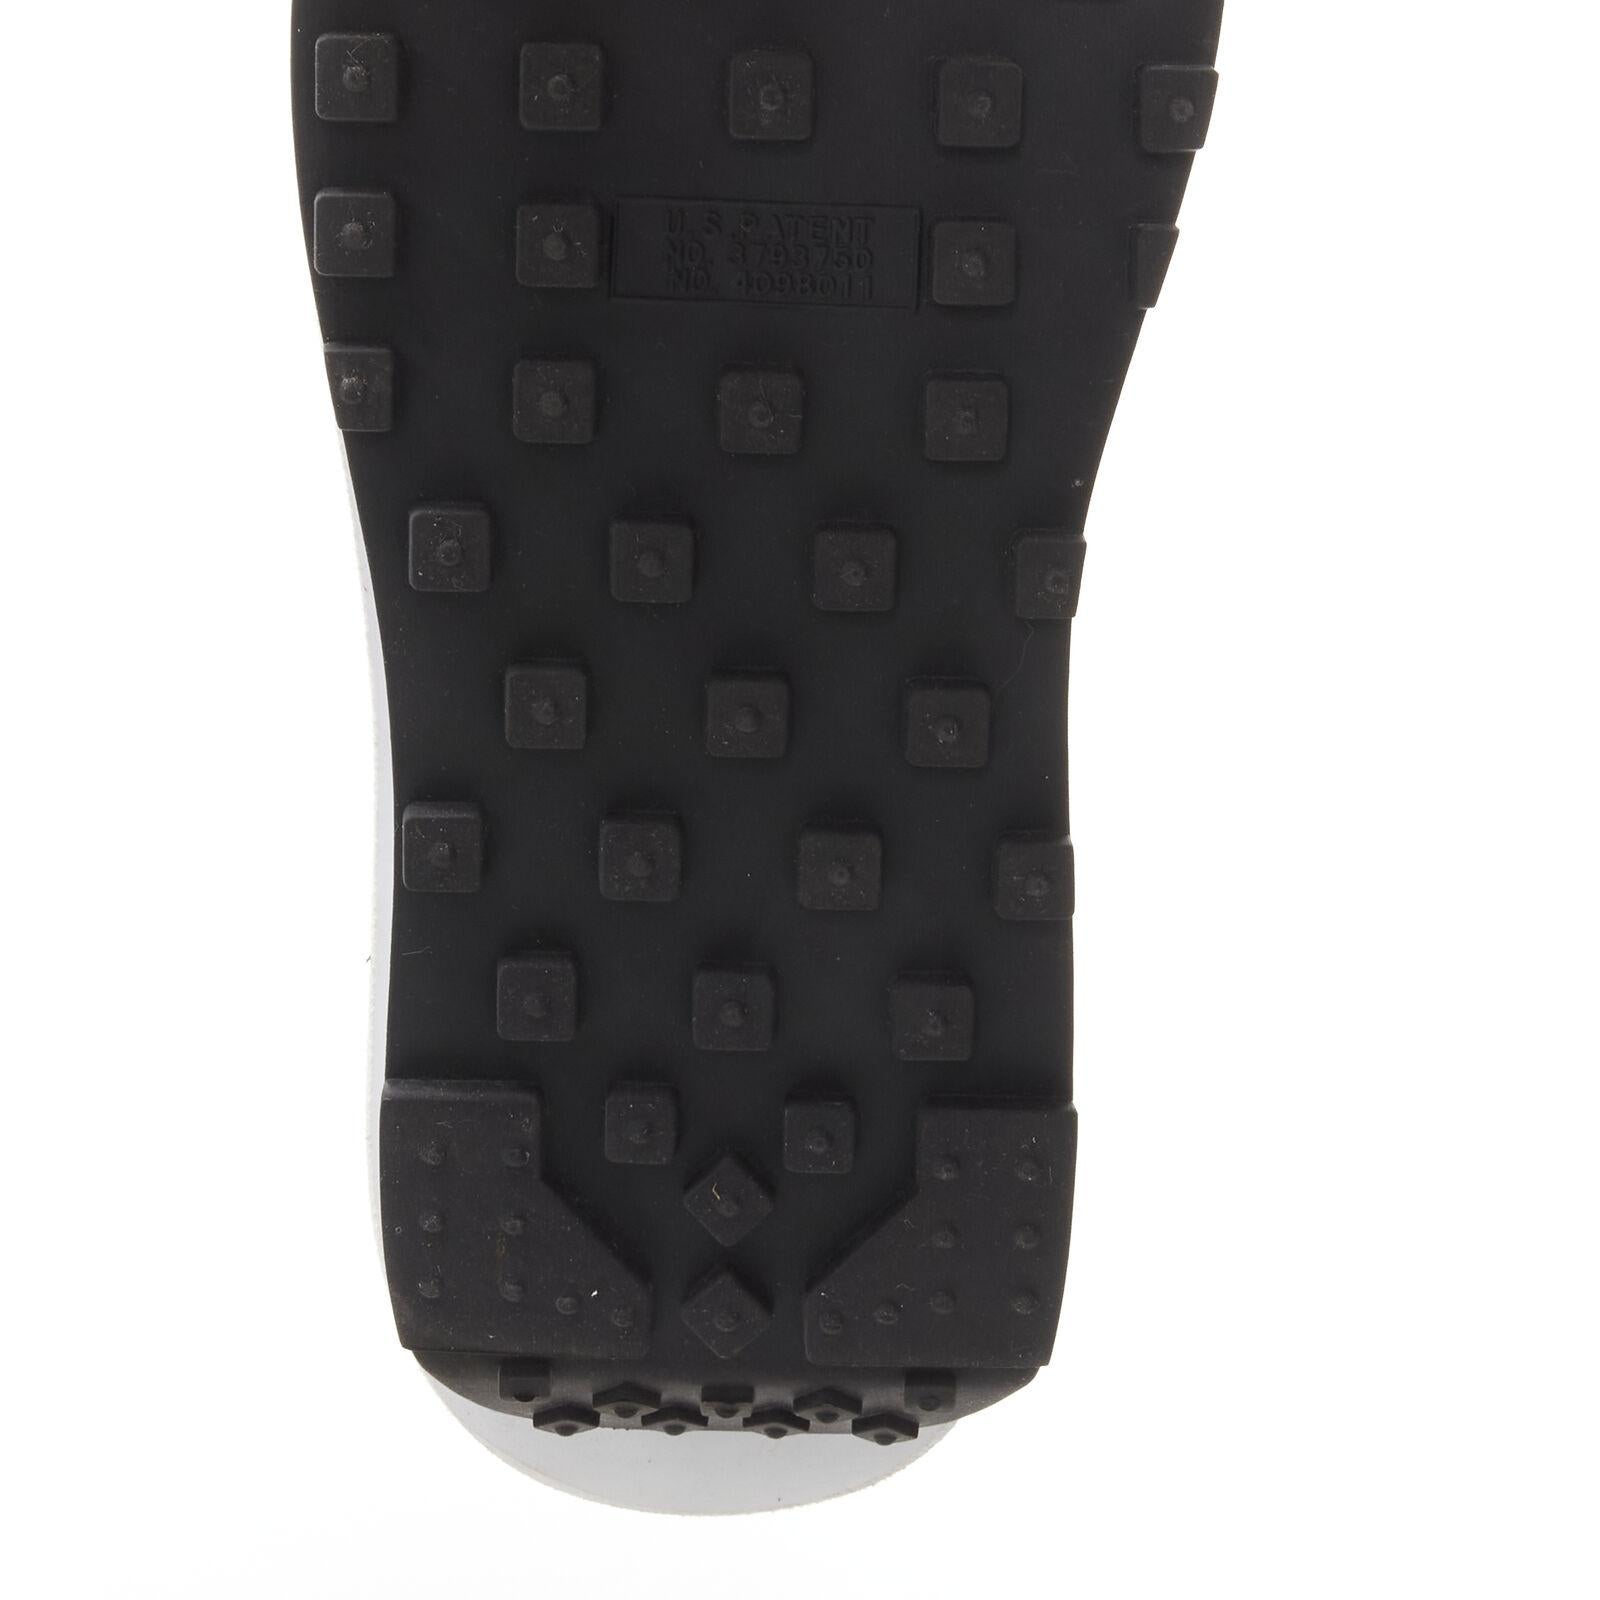 NIKE SACAI LD Waffle BV0073 002 black white sneaker US5 EU37.5 For Sale 5